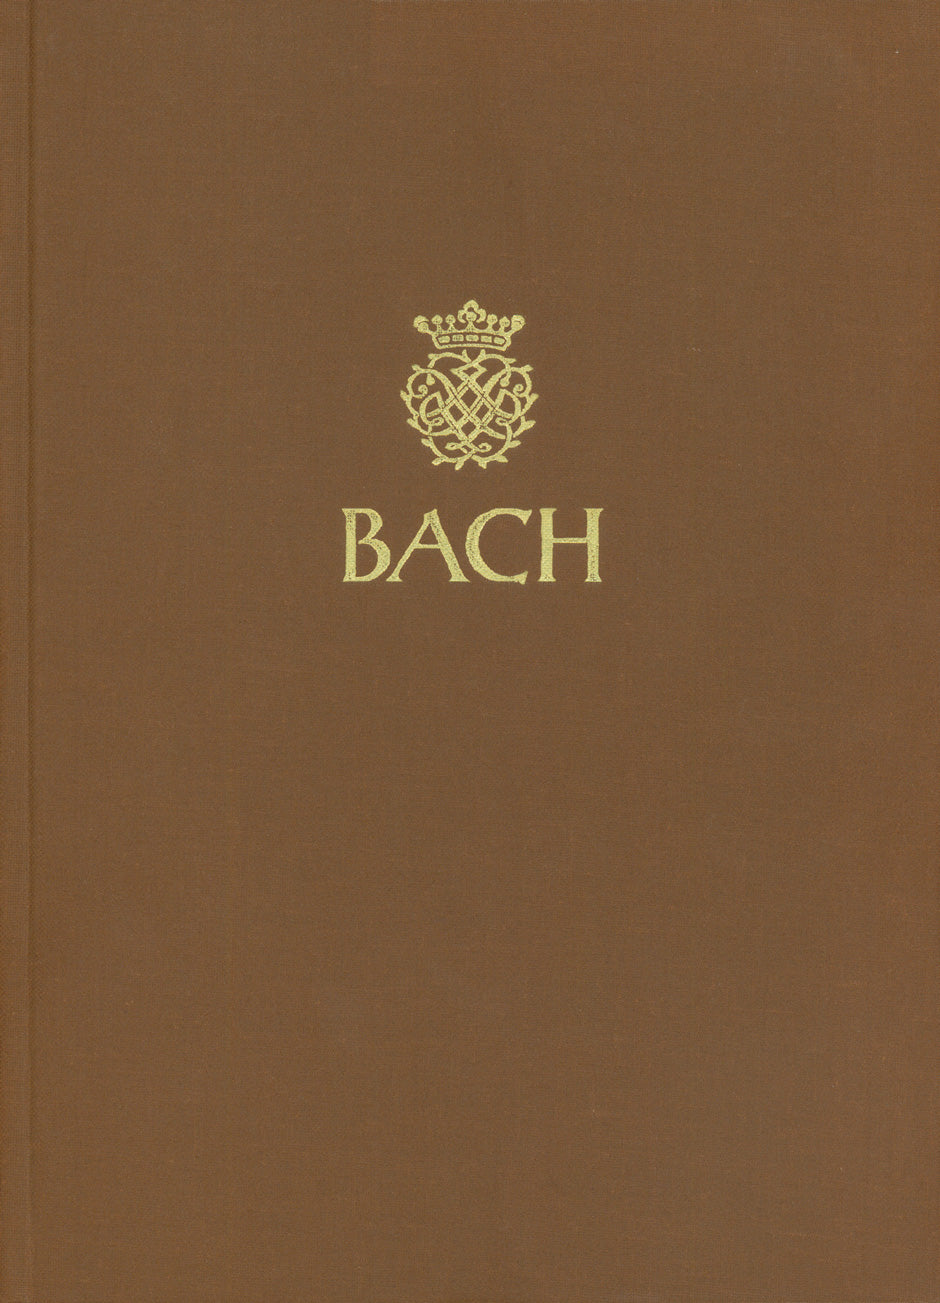 Concertos for Cembalo BWV 1052-1059 (Appendix: C.P.E. Bach, Concerto after BWV 1052)